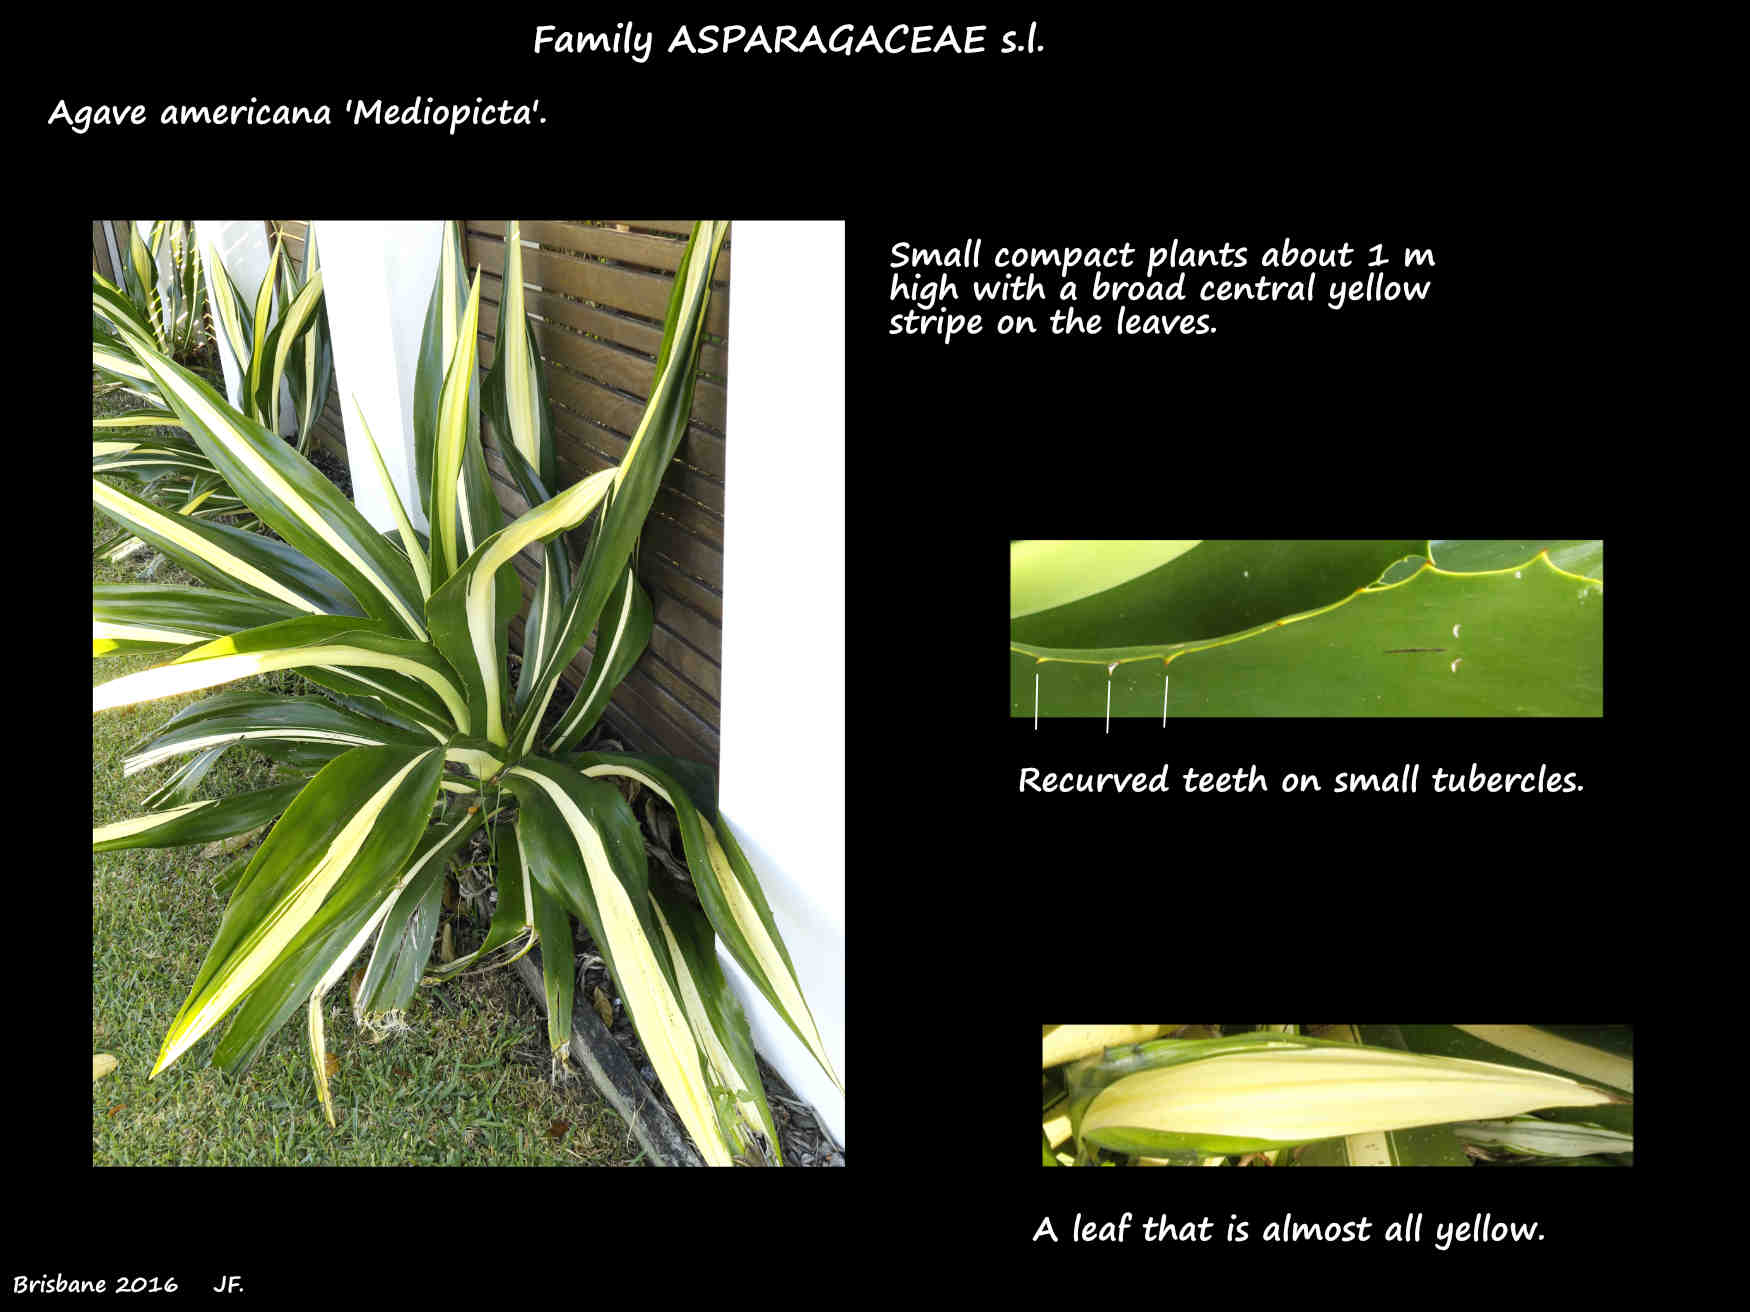 An Agave americana 'Mediopicta' plant